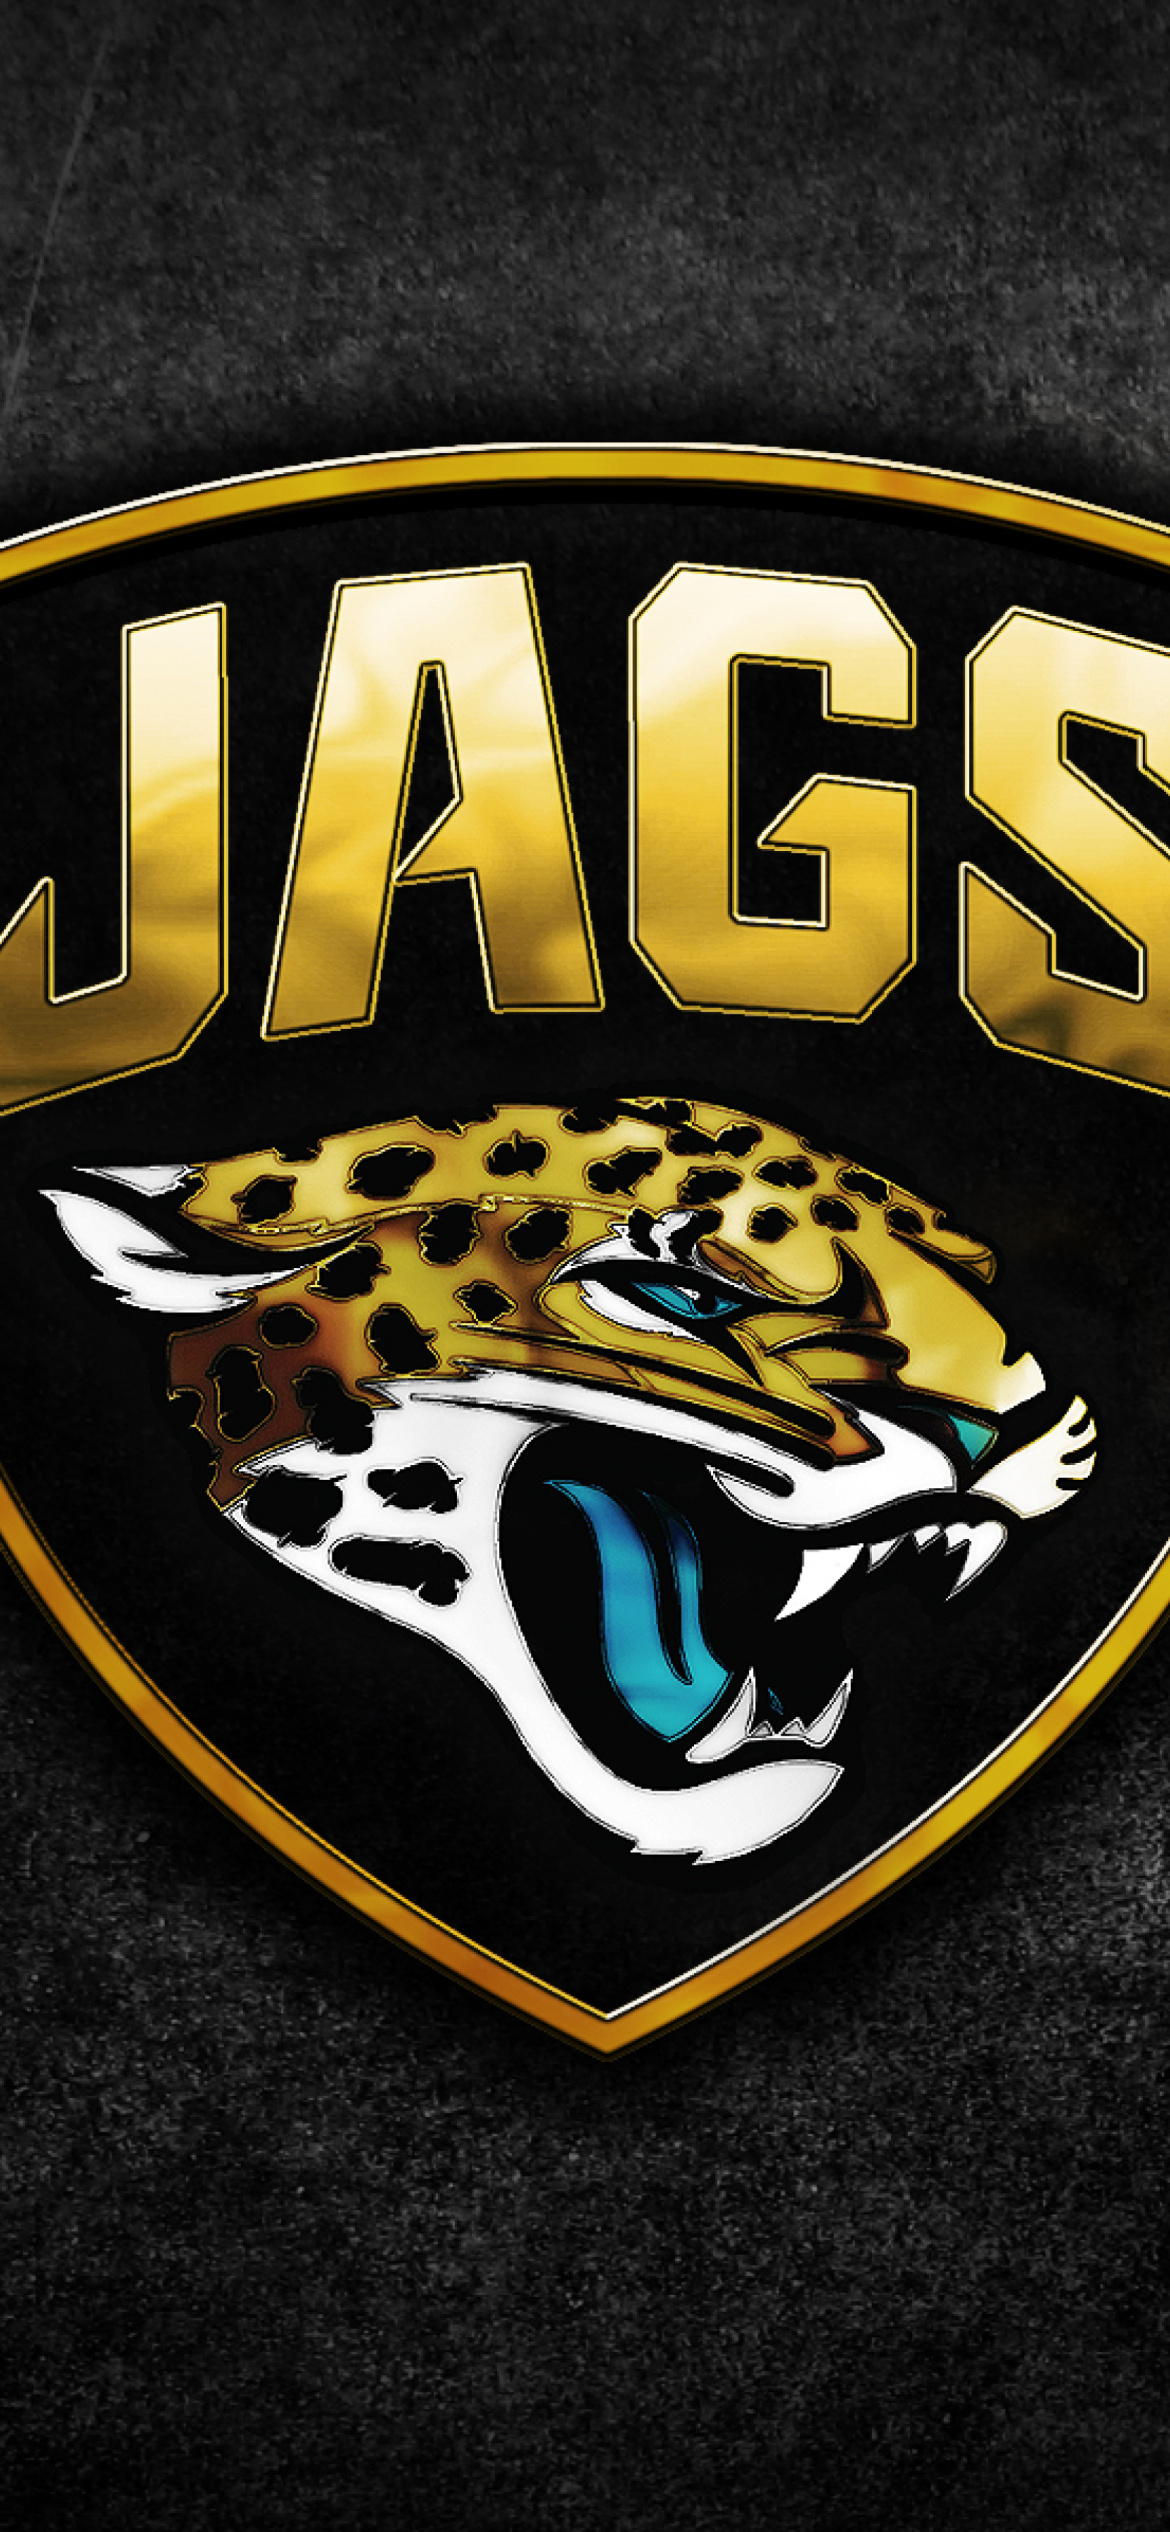 Das Jacksonville Jaguars NFL Team Logo Wallpaper 1170x2532